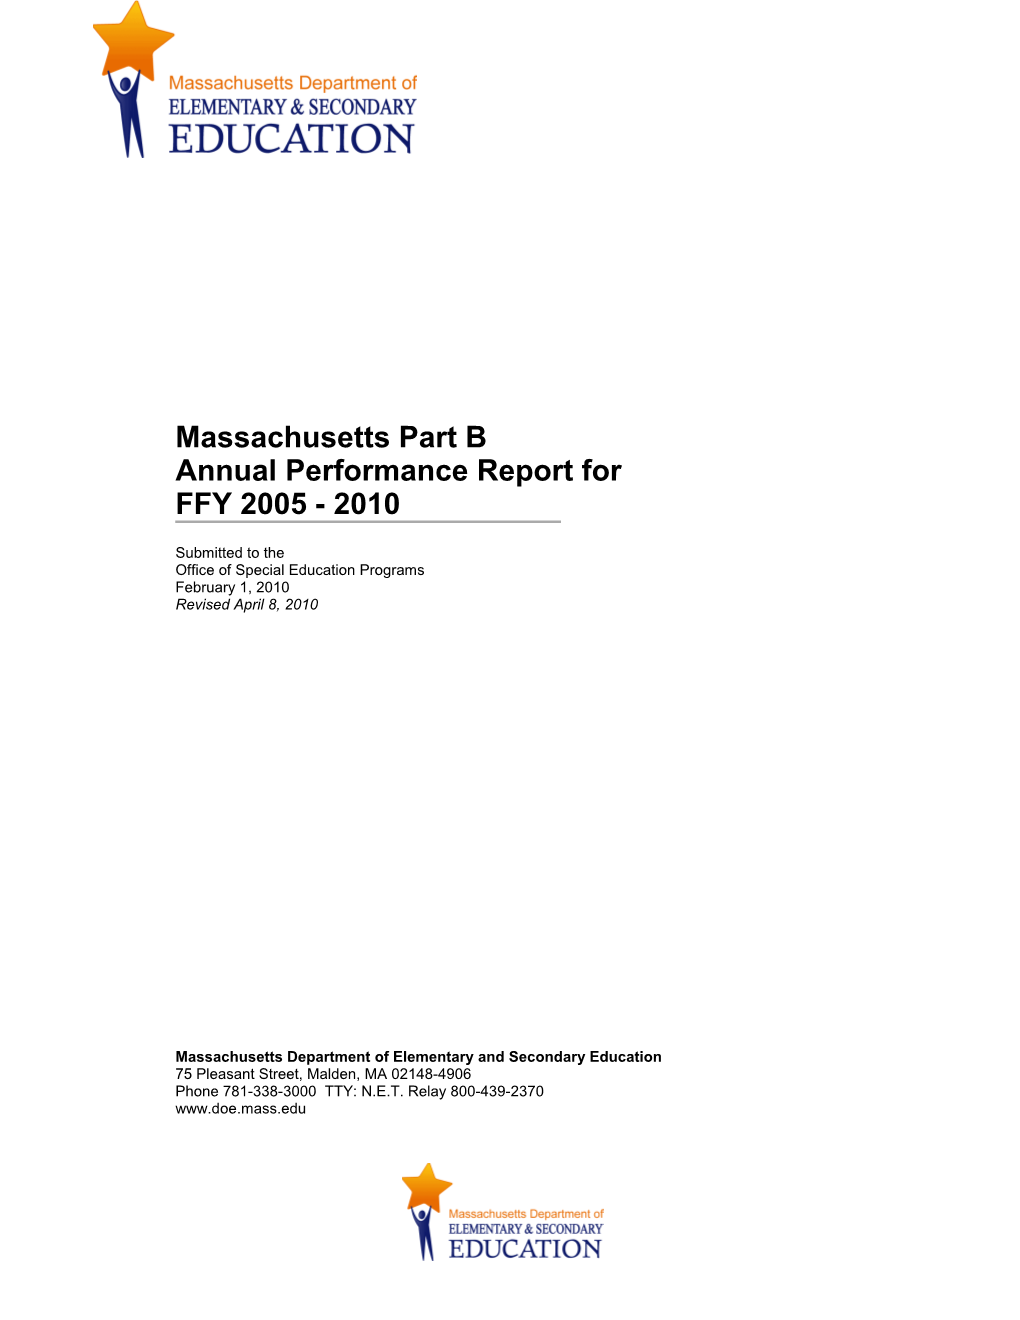 Part B Massachusetts Annual Performance Report (MA APR) for FFY 2008